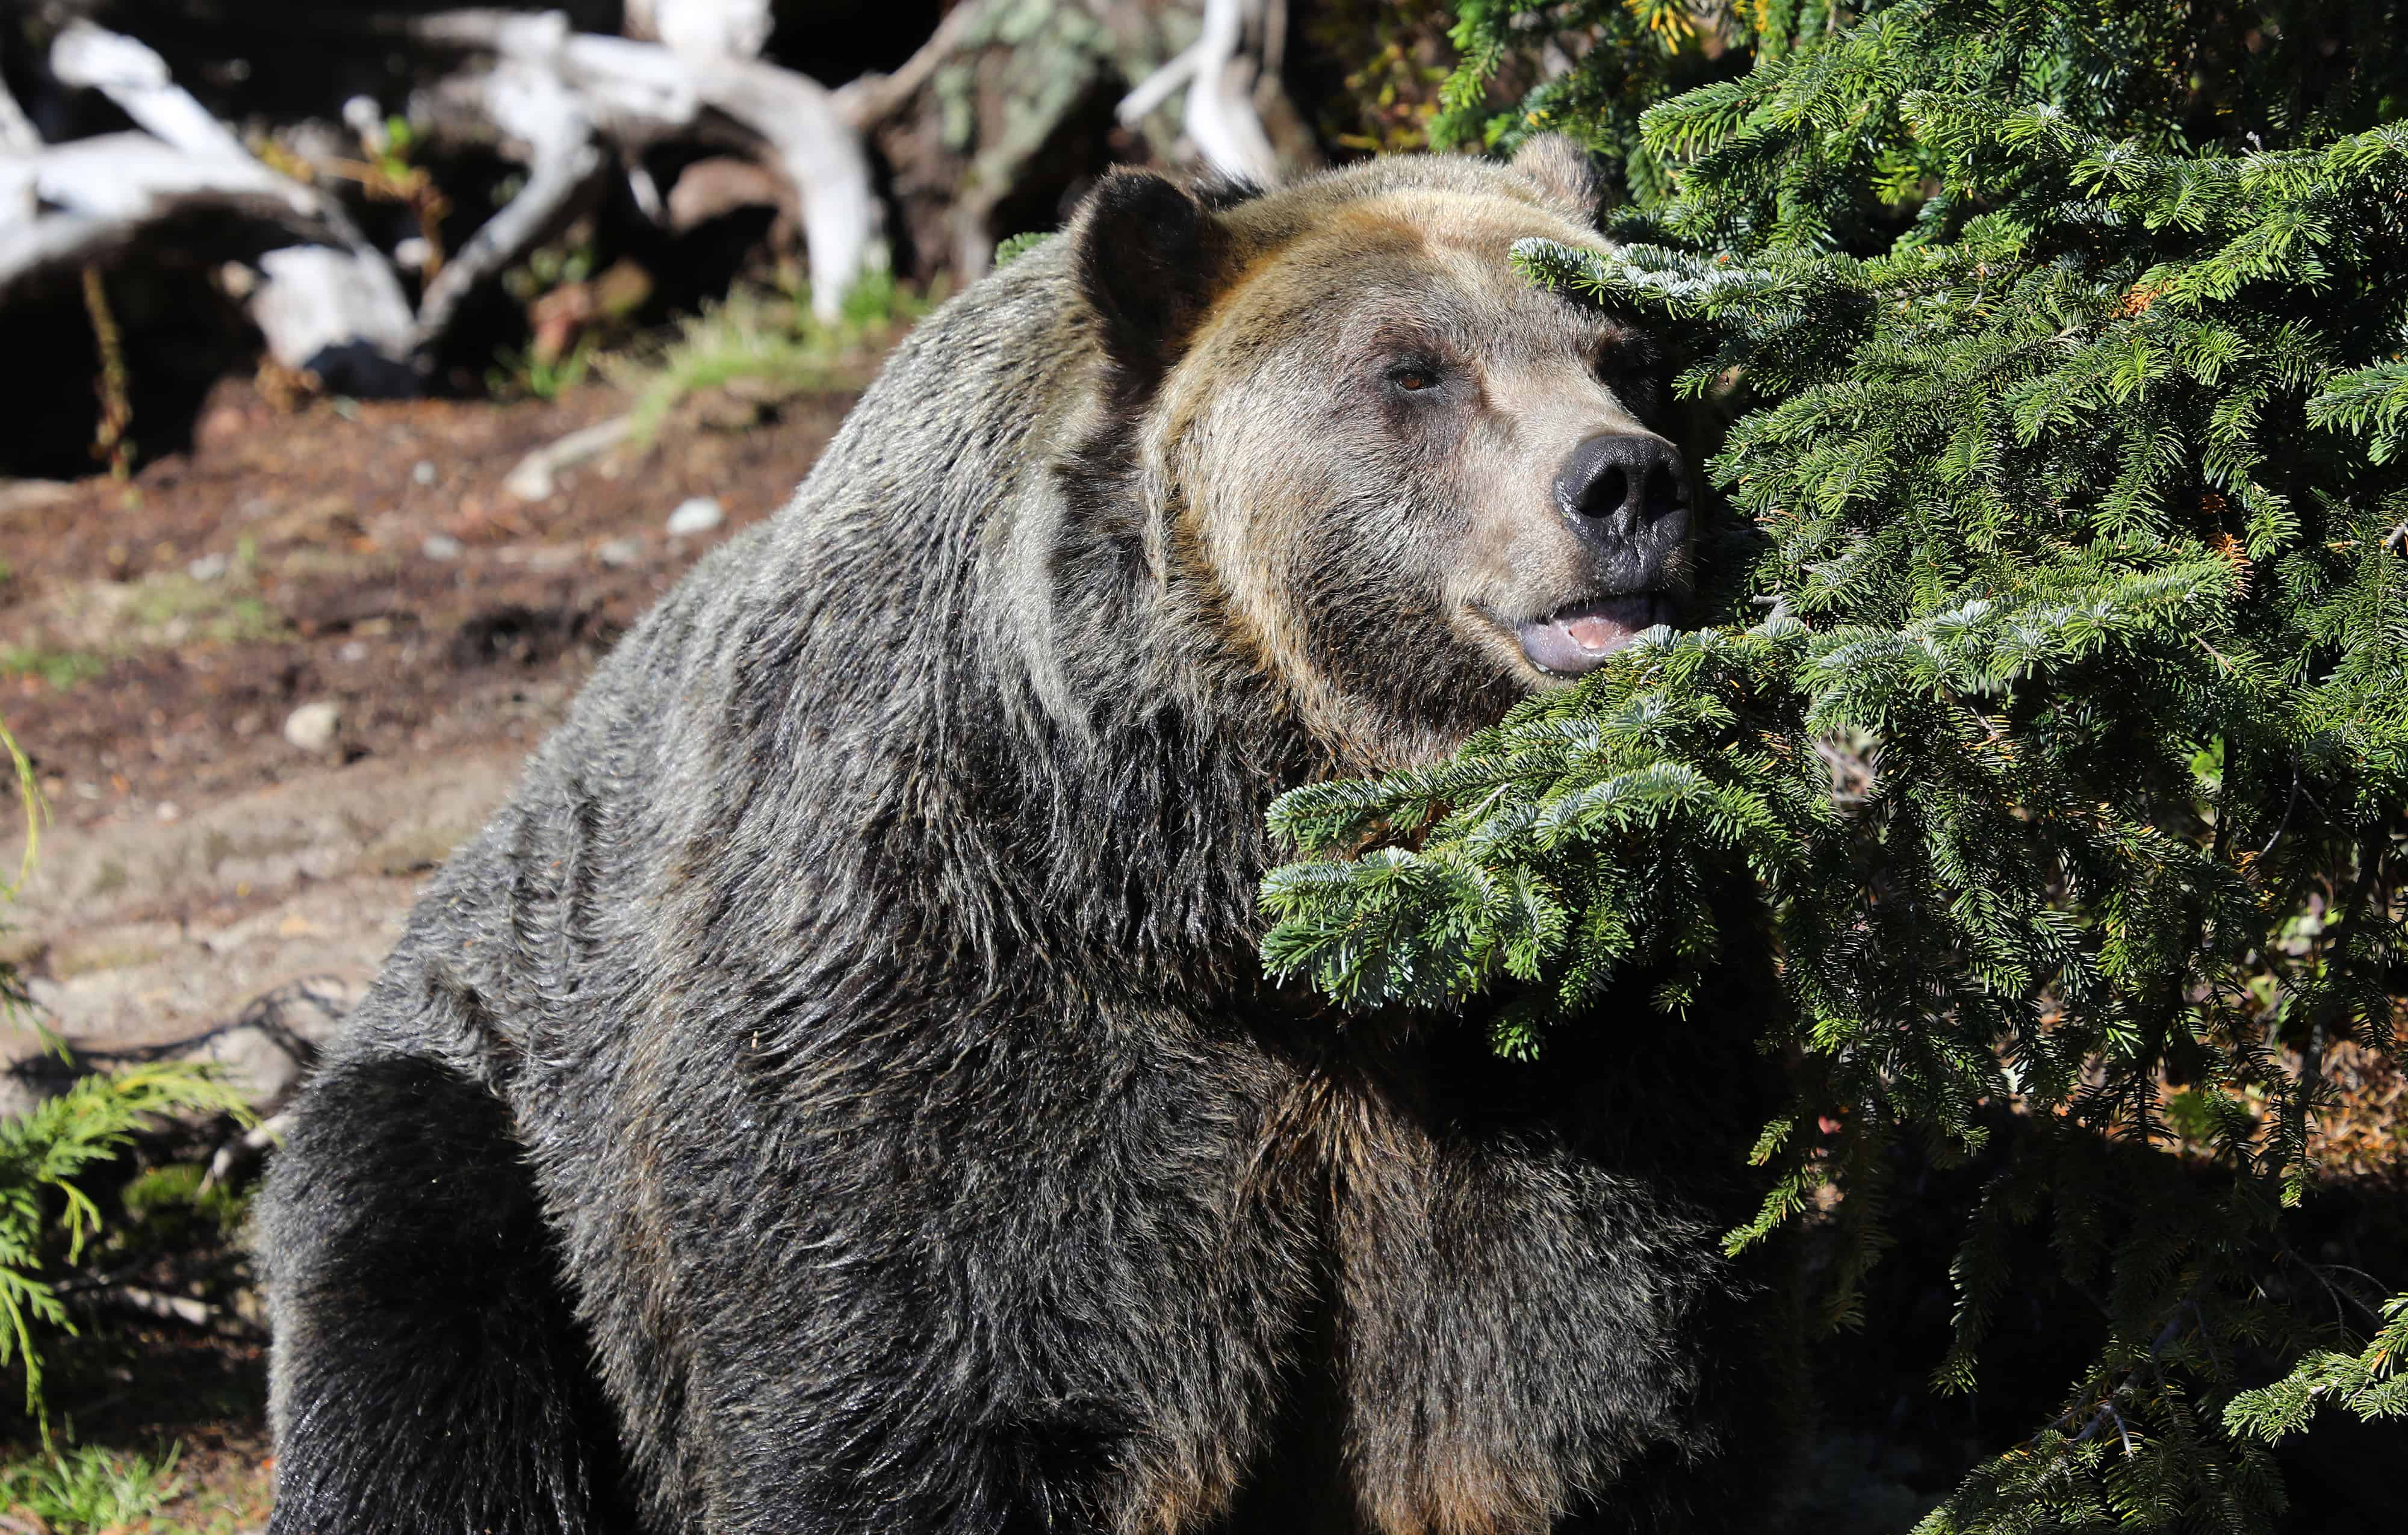 Bears In Montana